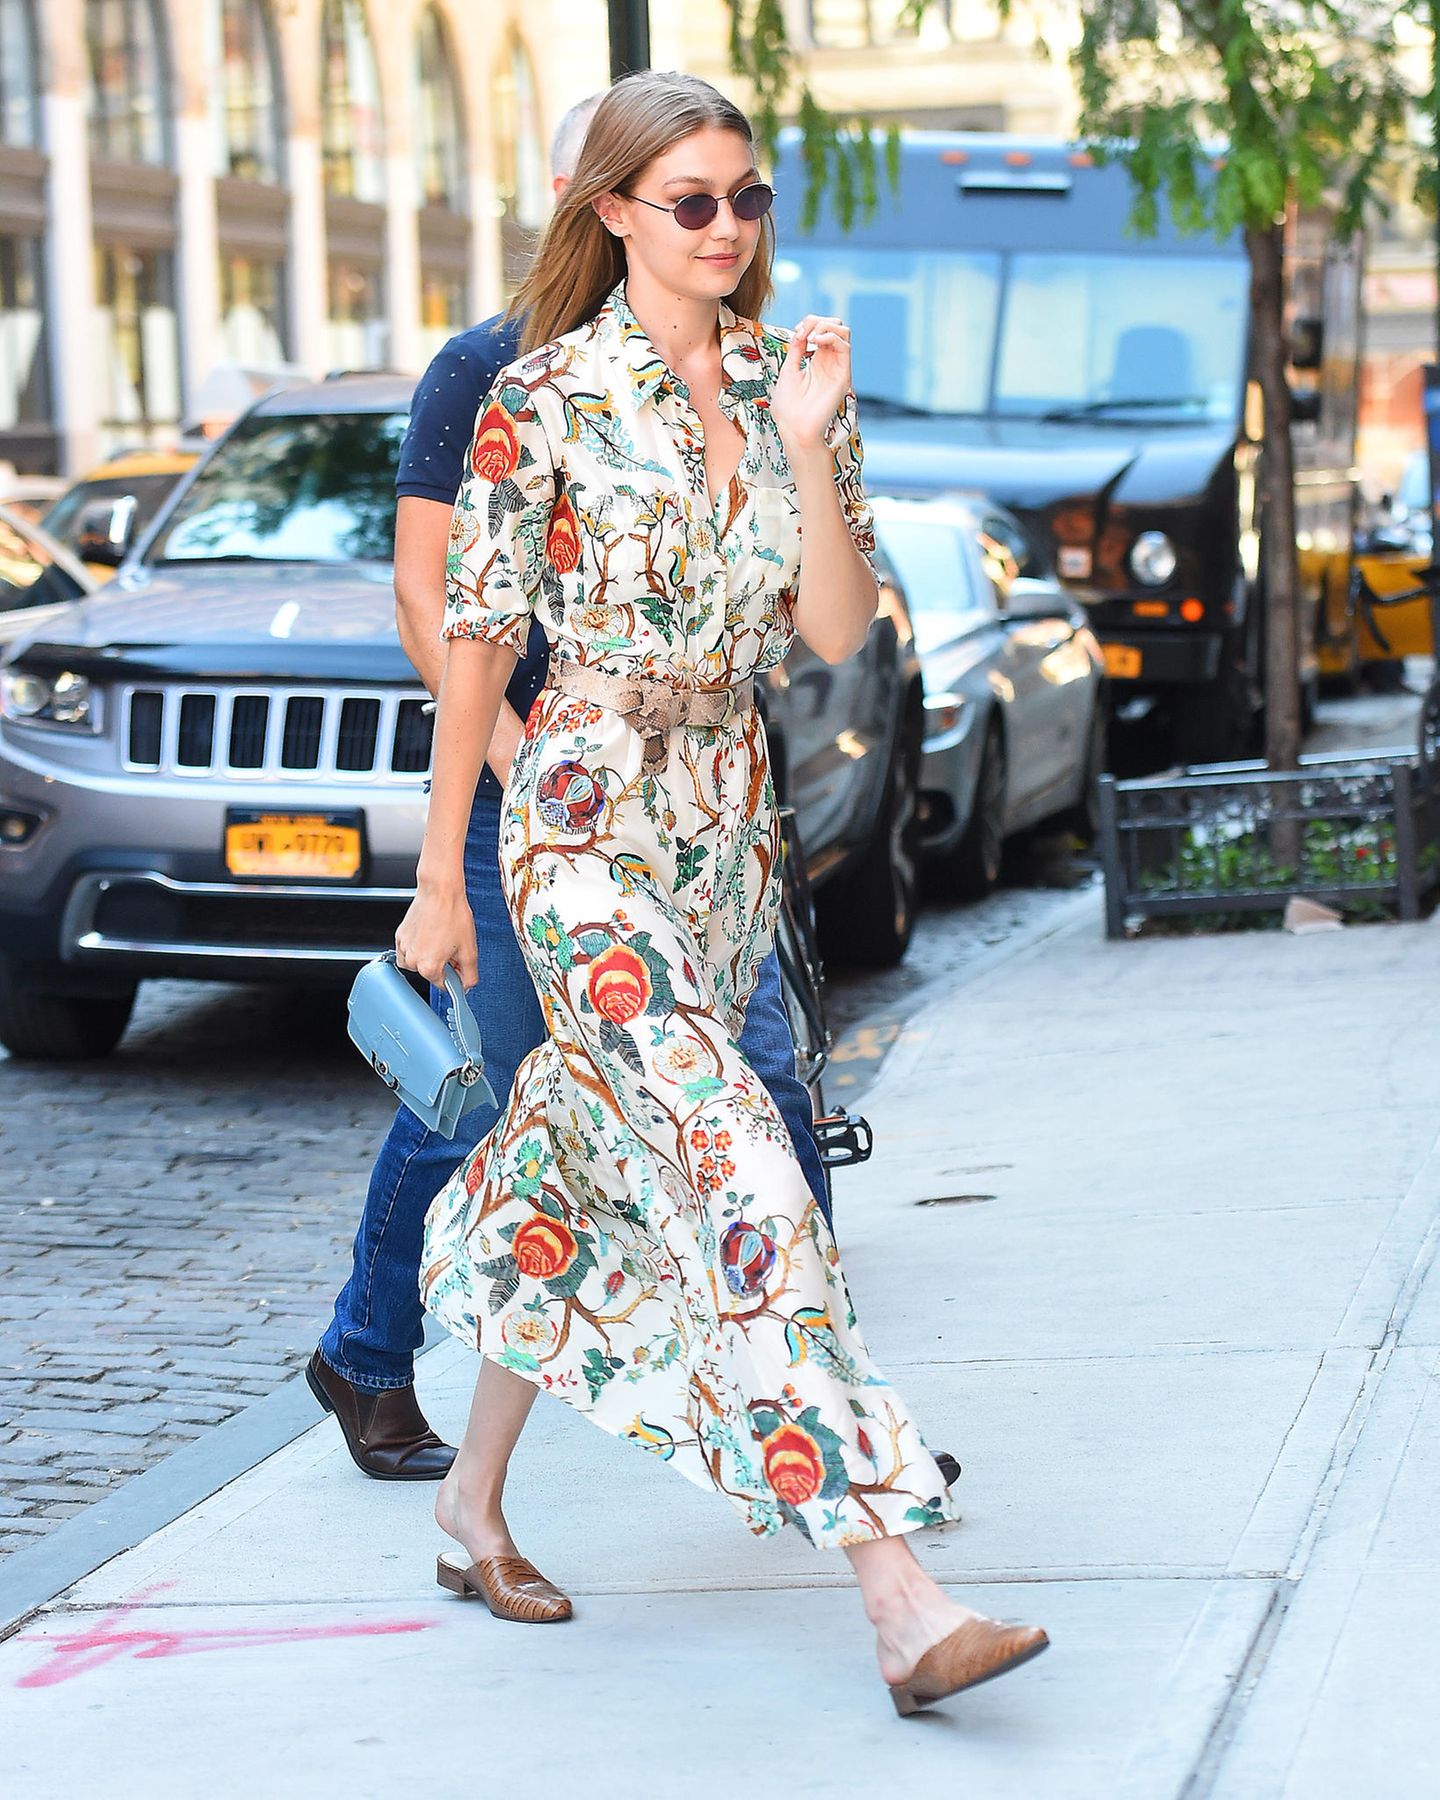 Model Gigi Hadid unterwegs in New York - in Slippern. 